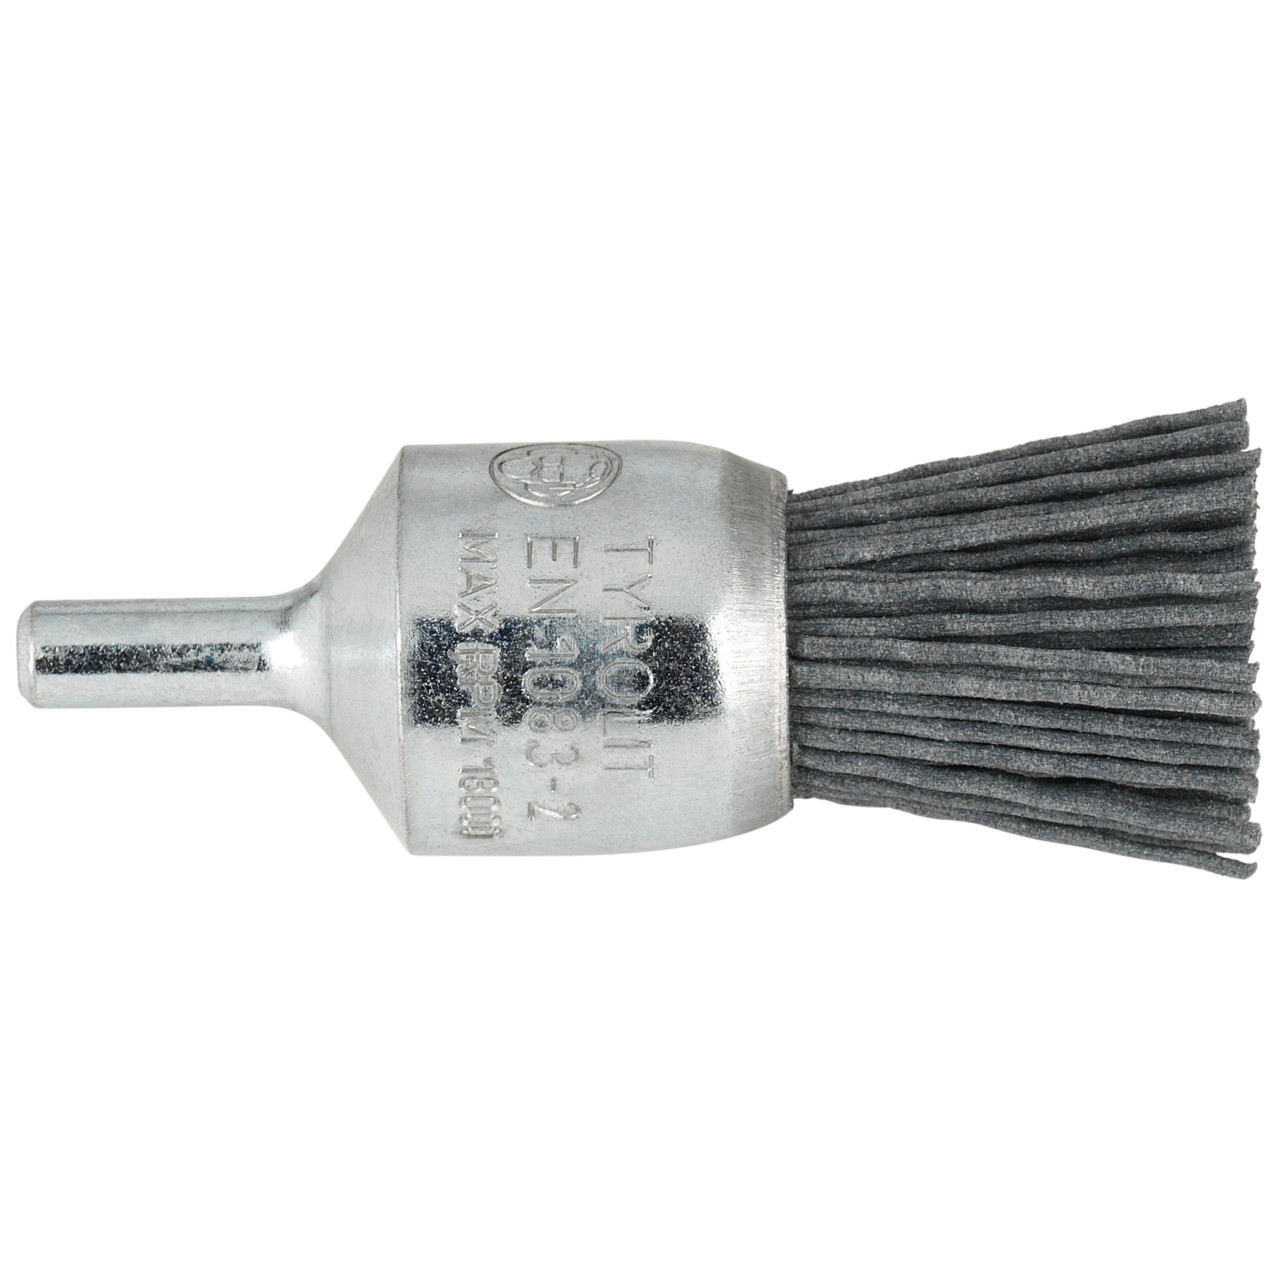 Tyrolit Brush brushes DxH-GExI 30x25-6x68 For universal use, shape: 52PDK - (brush brushes), Art. 34043552